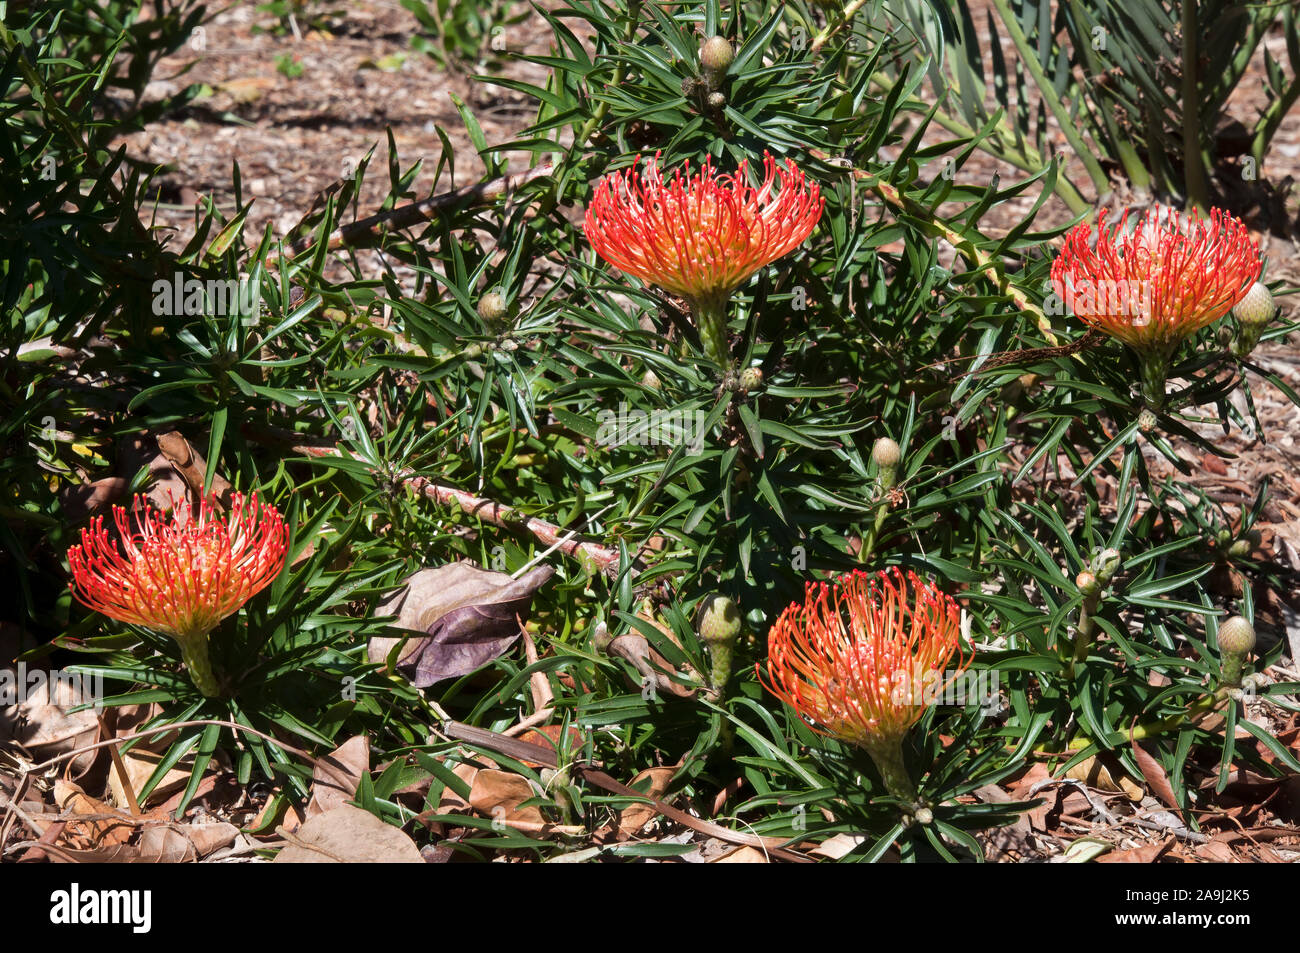 Sydney Australia, bright orange flowerheads of a Leucospermum x lineare bush in garden Stock Photo